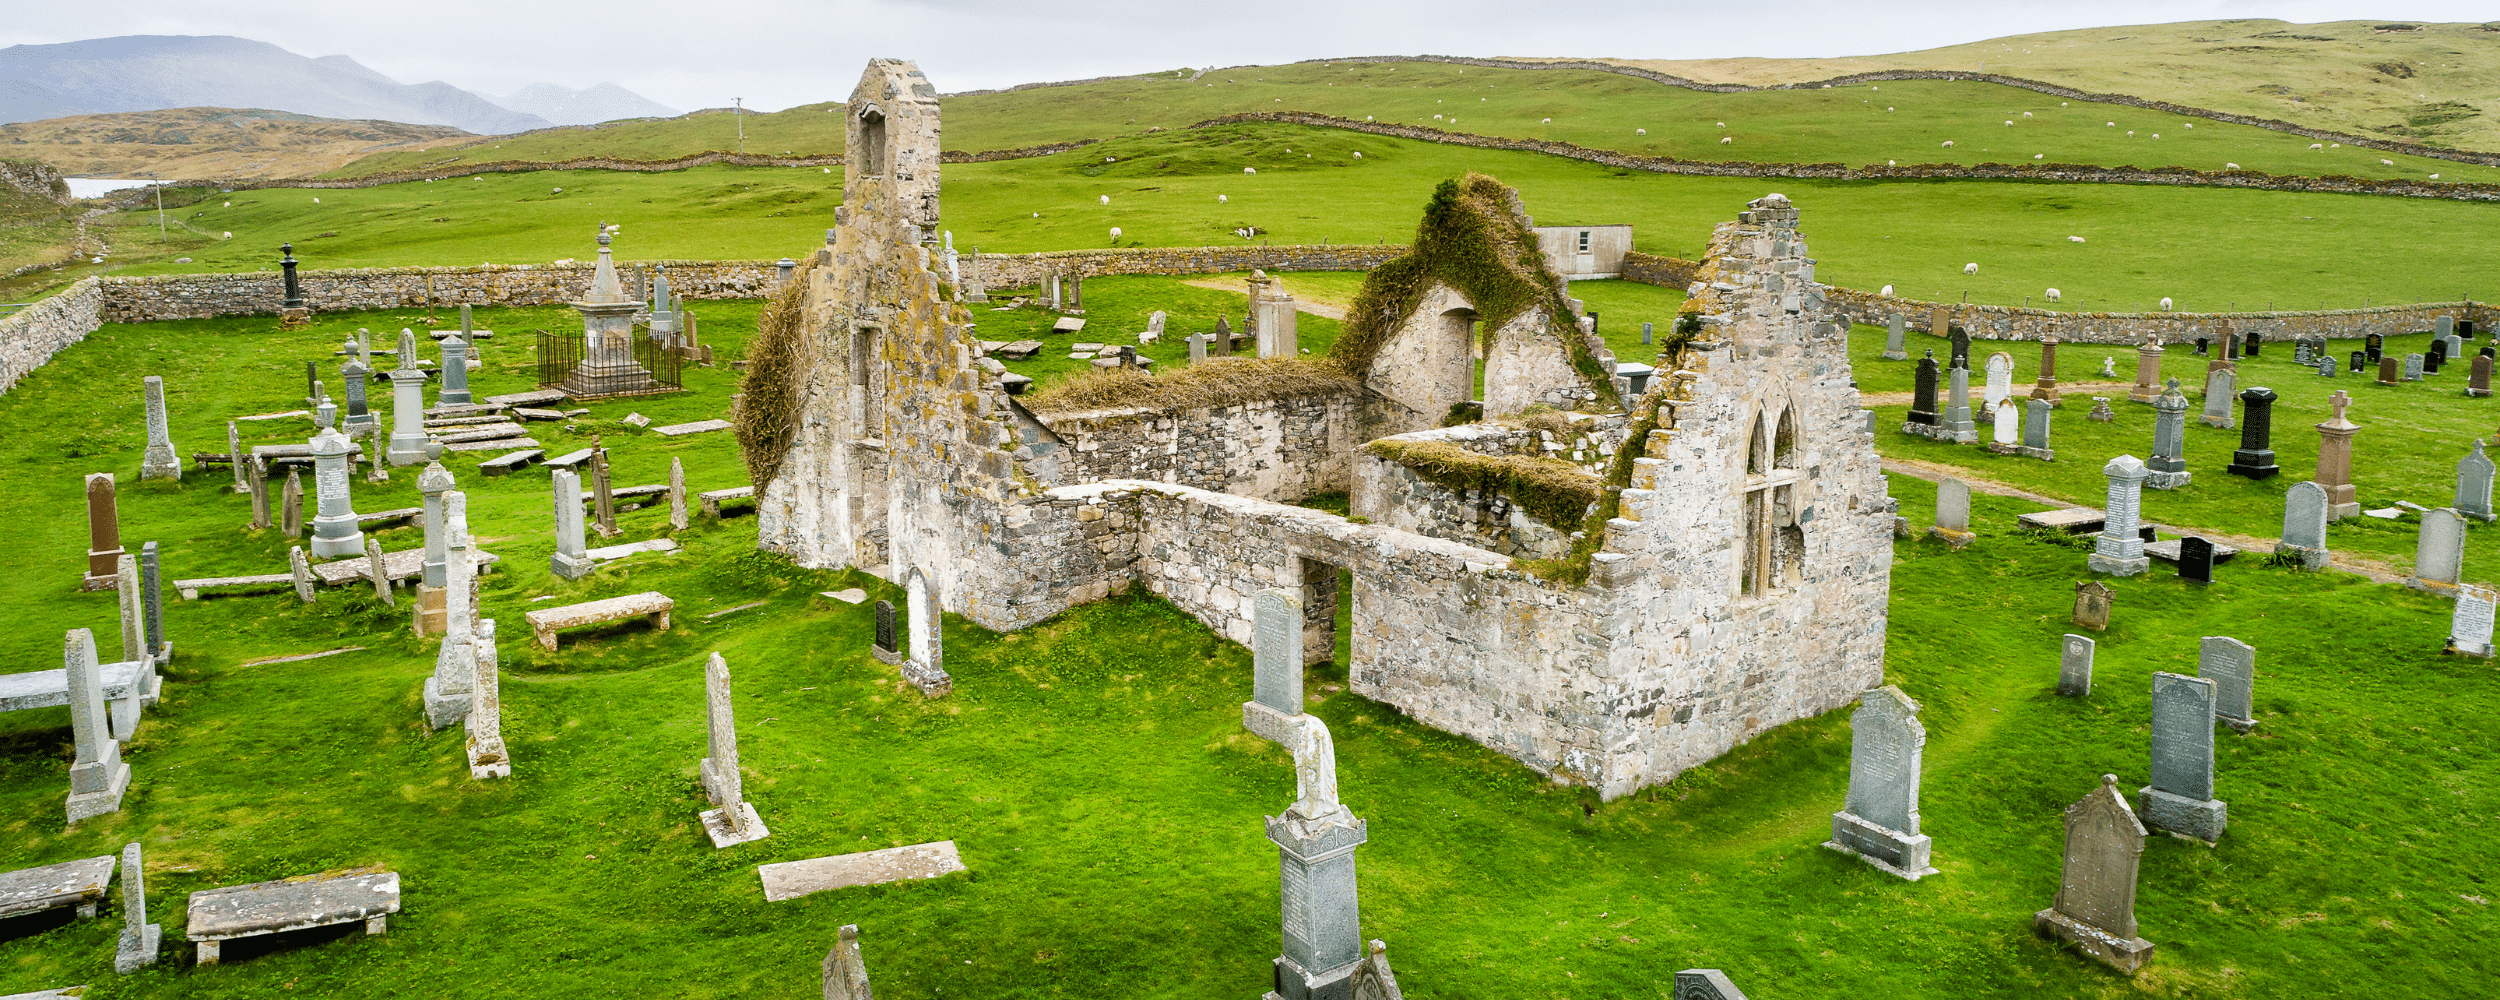 the balnakeil church graveyard